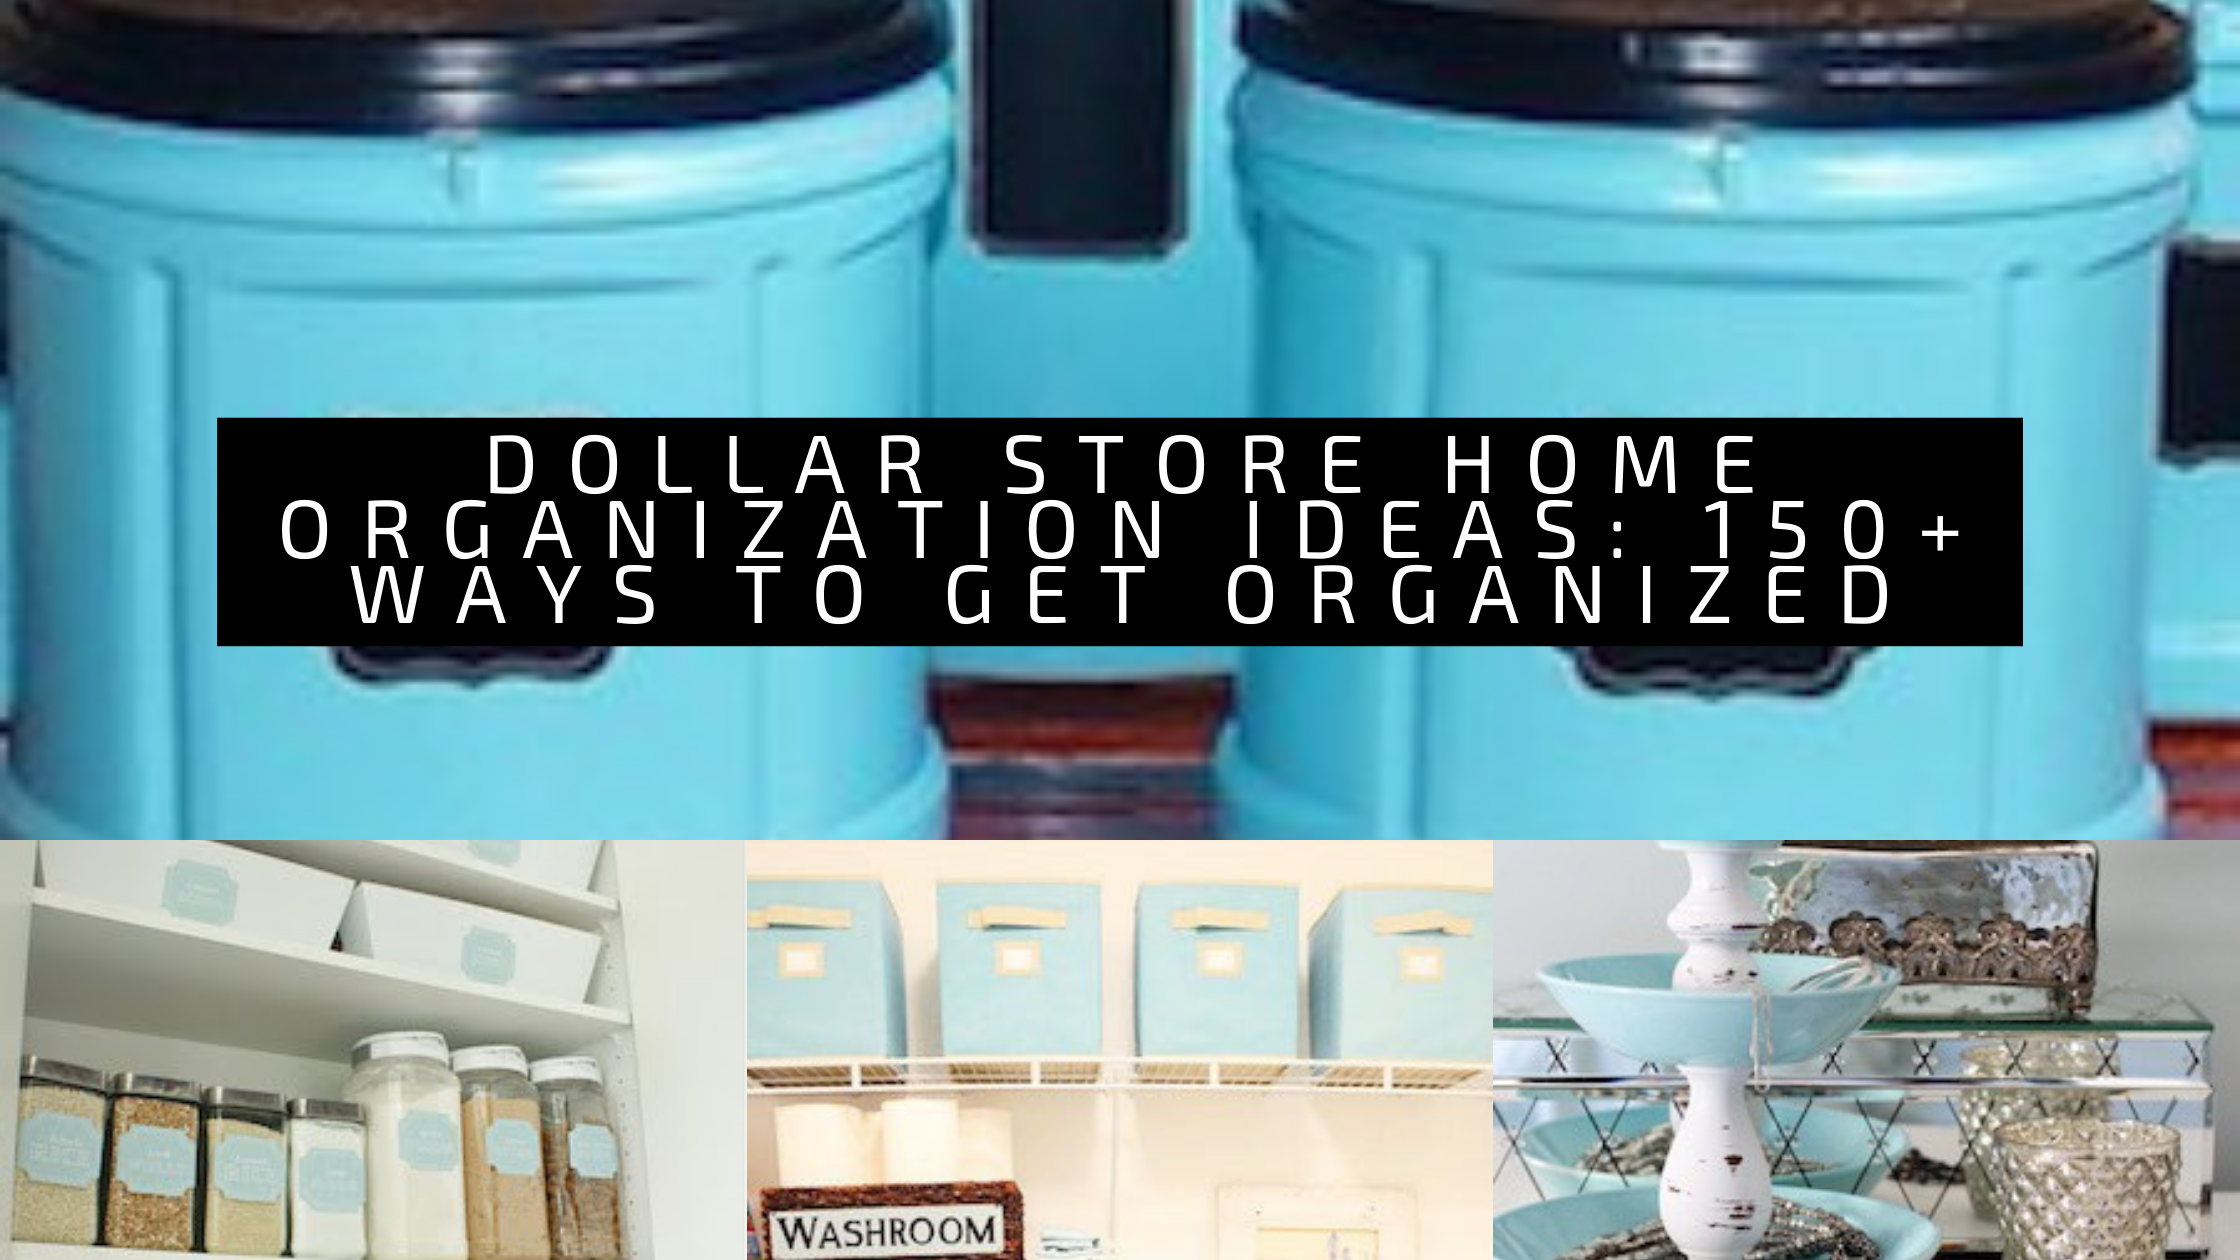 Dollar Store Home Organization Ideas: 150+ Ways to Get Organized 27